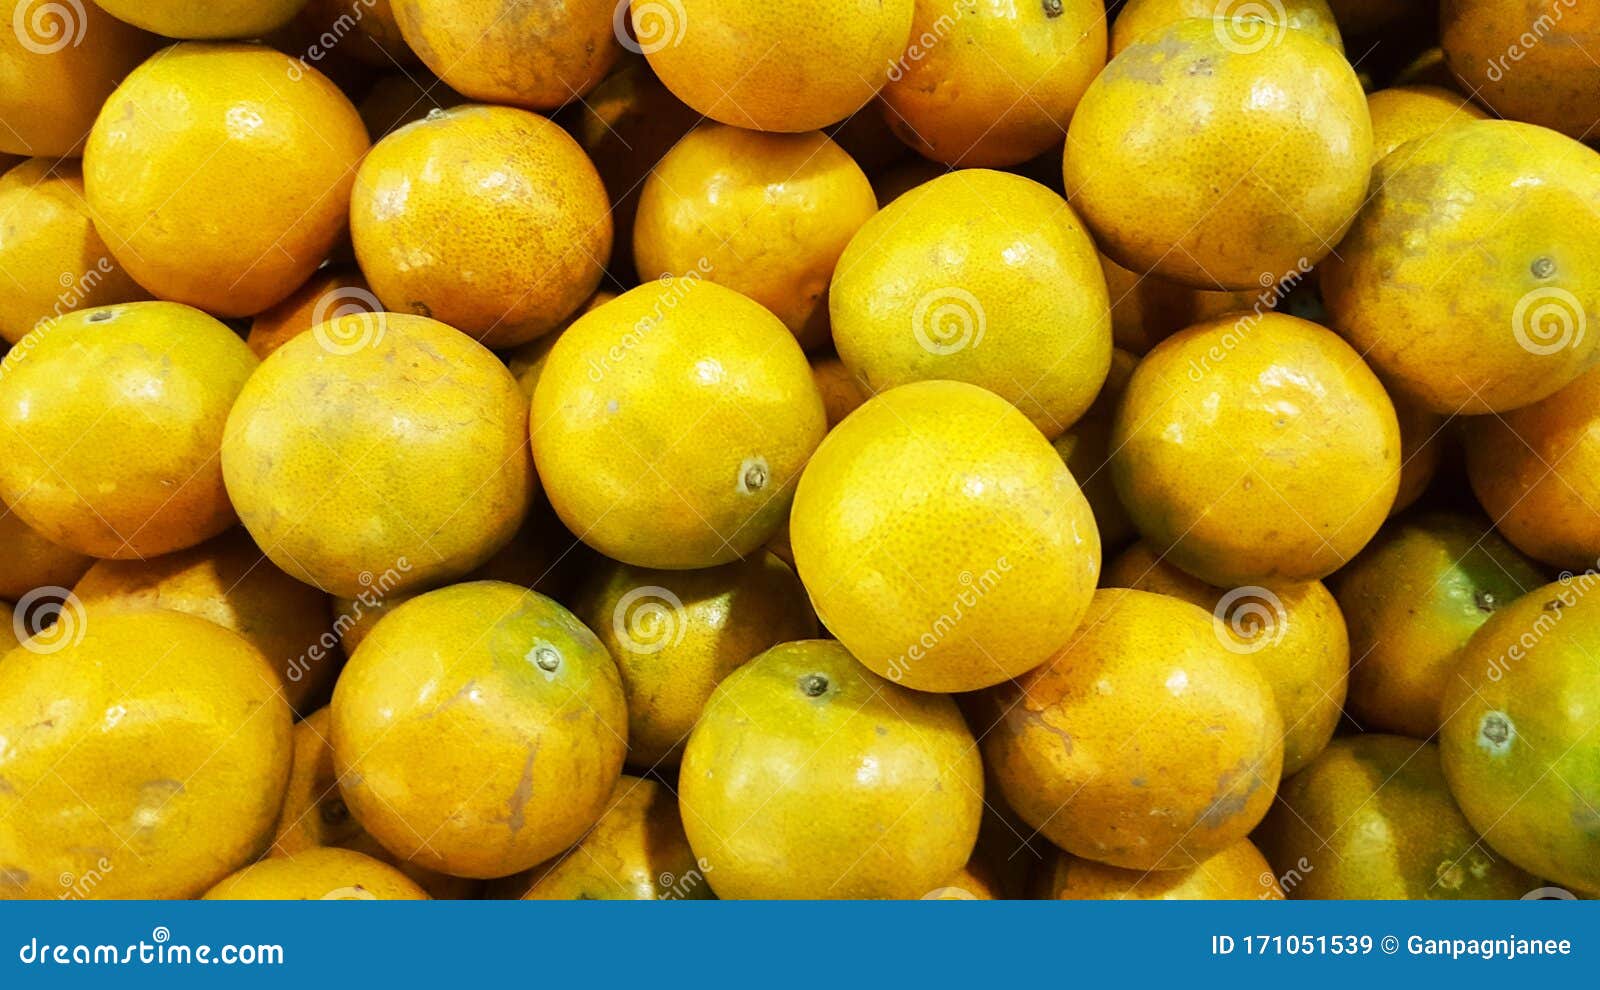 orange fruit on supermaket